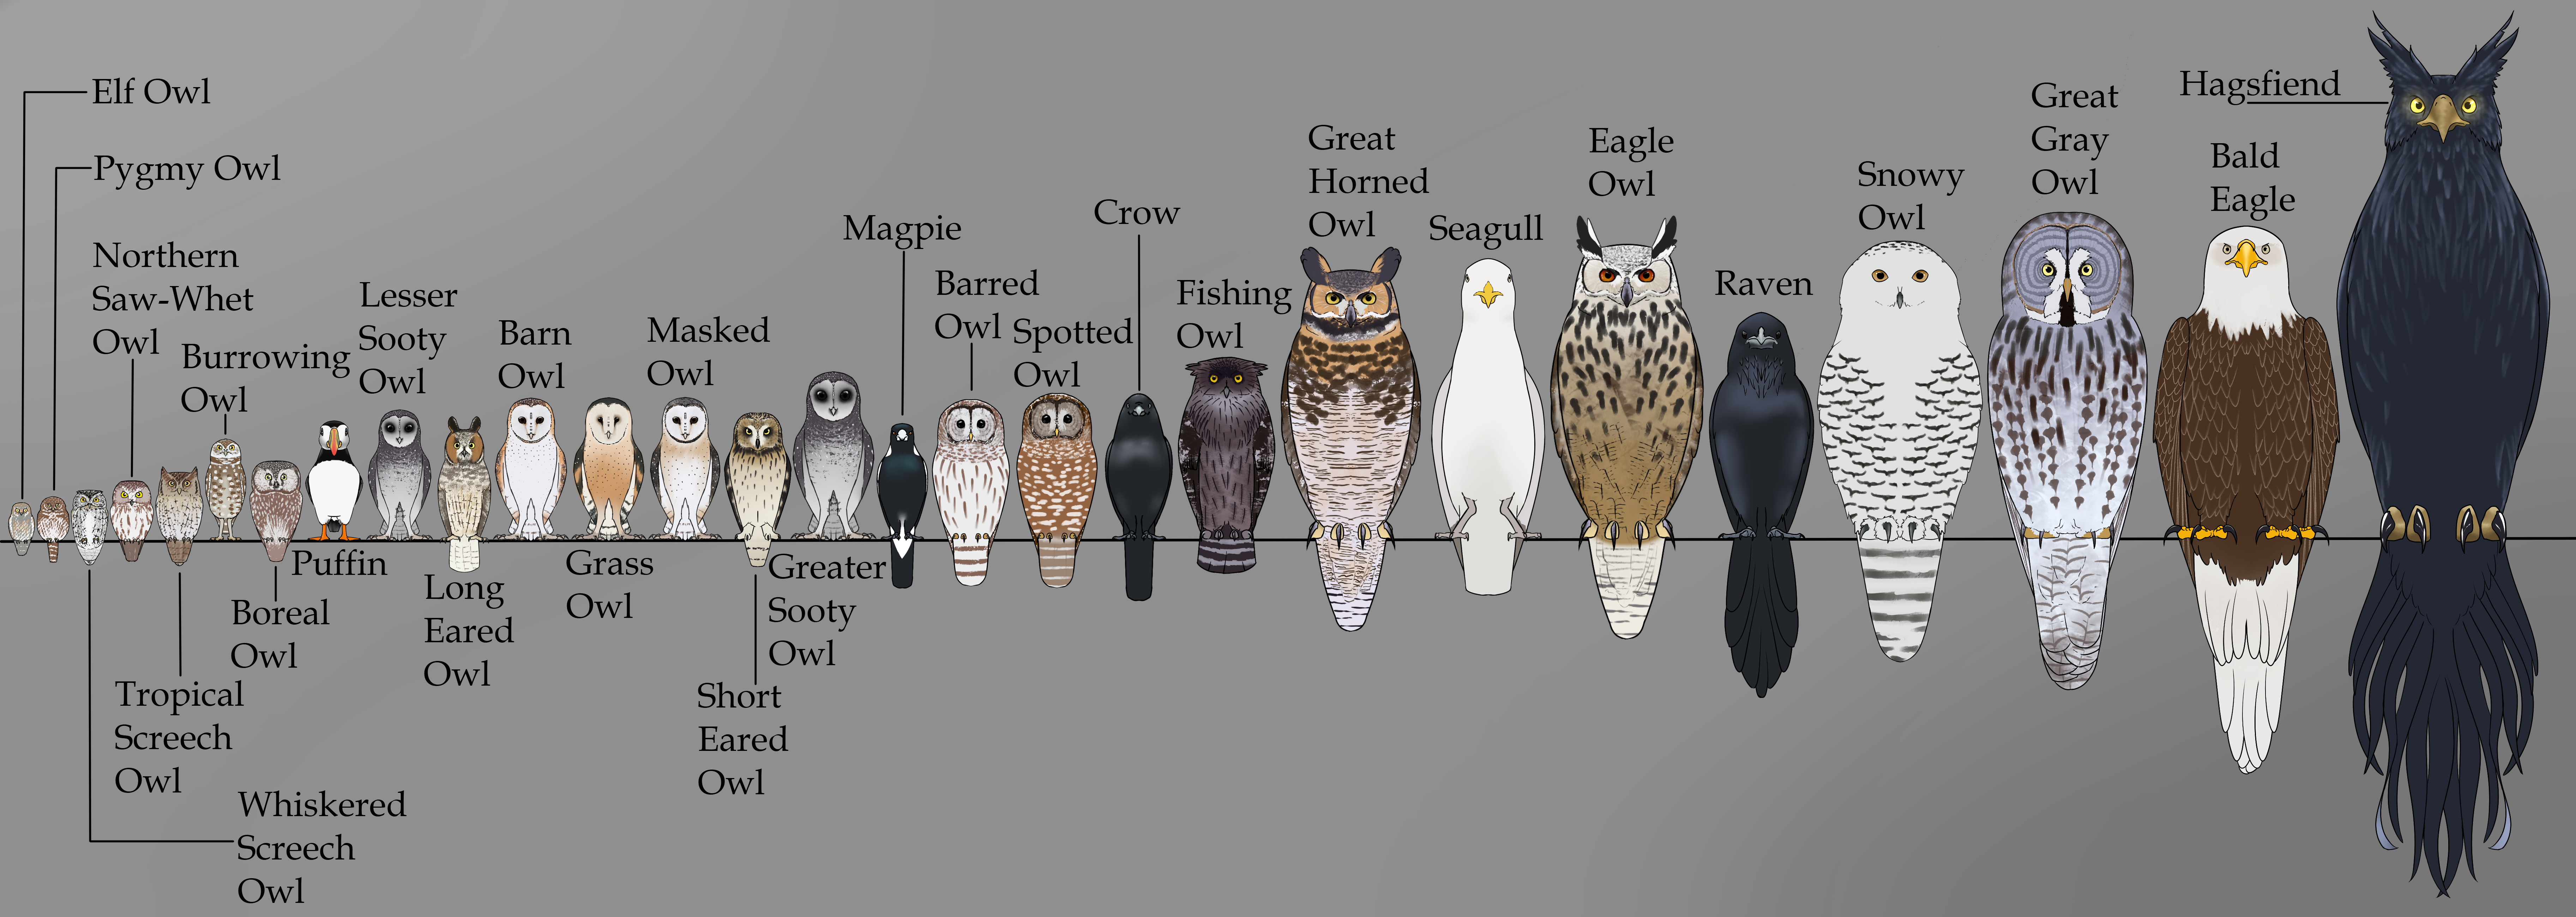 Ga'Hoole Bird Size Comparison by FantasyFanatic365 on DeviantArt